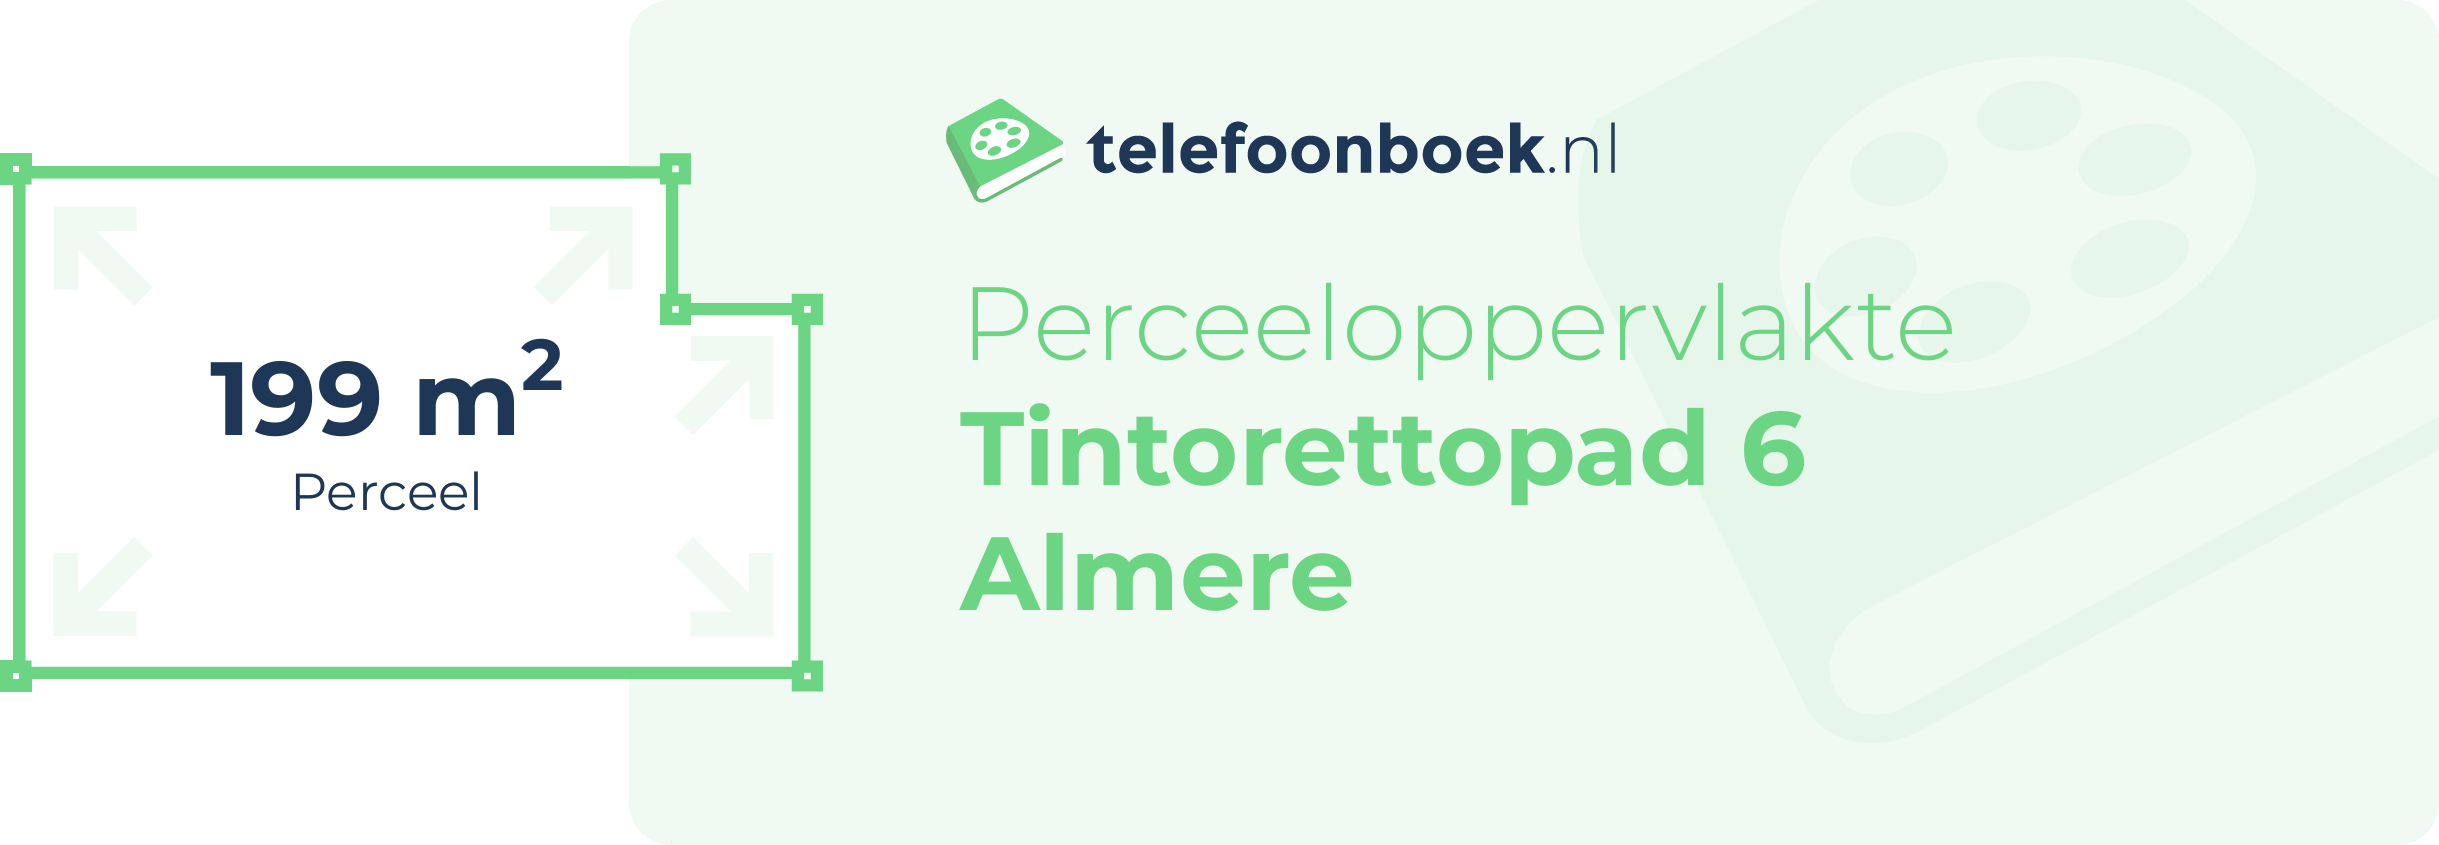 Perceeloppervlakte Tintorettopad 6 Almere